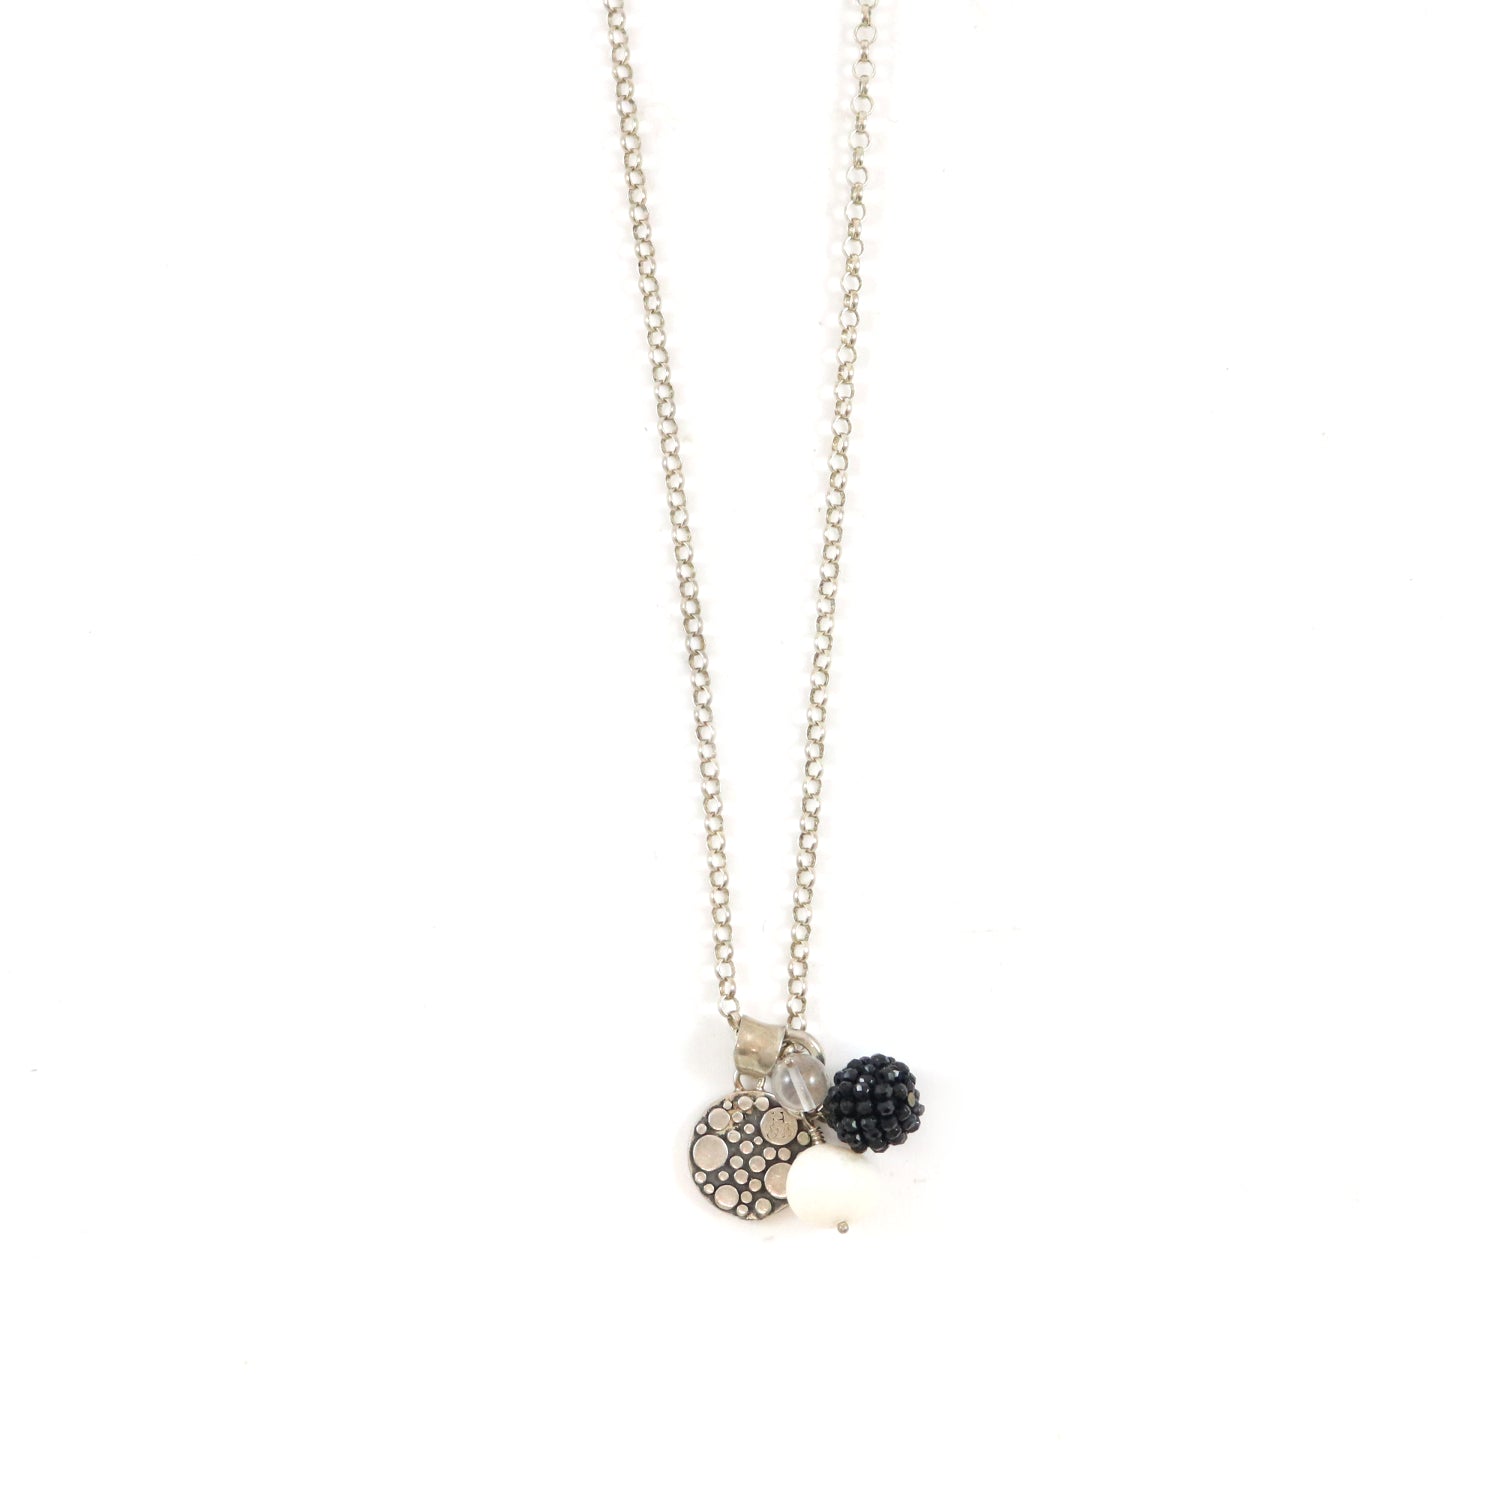 Black & White Cluster Necklace